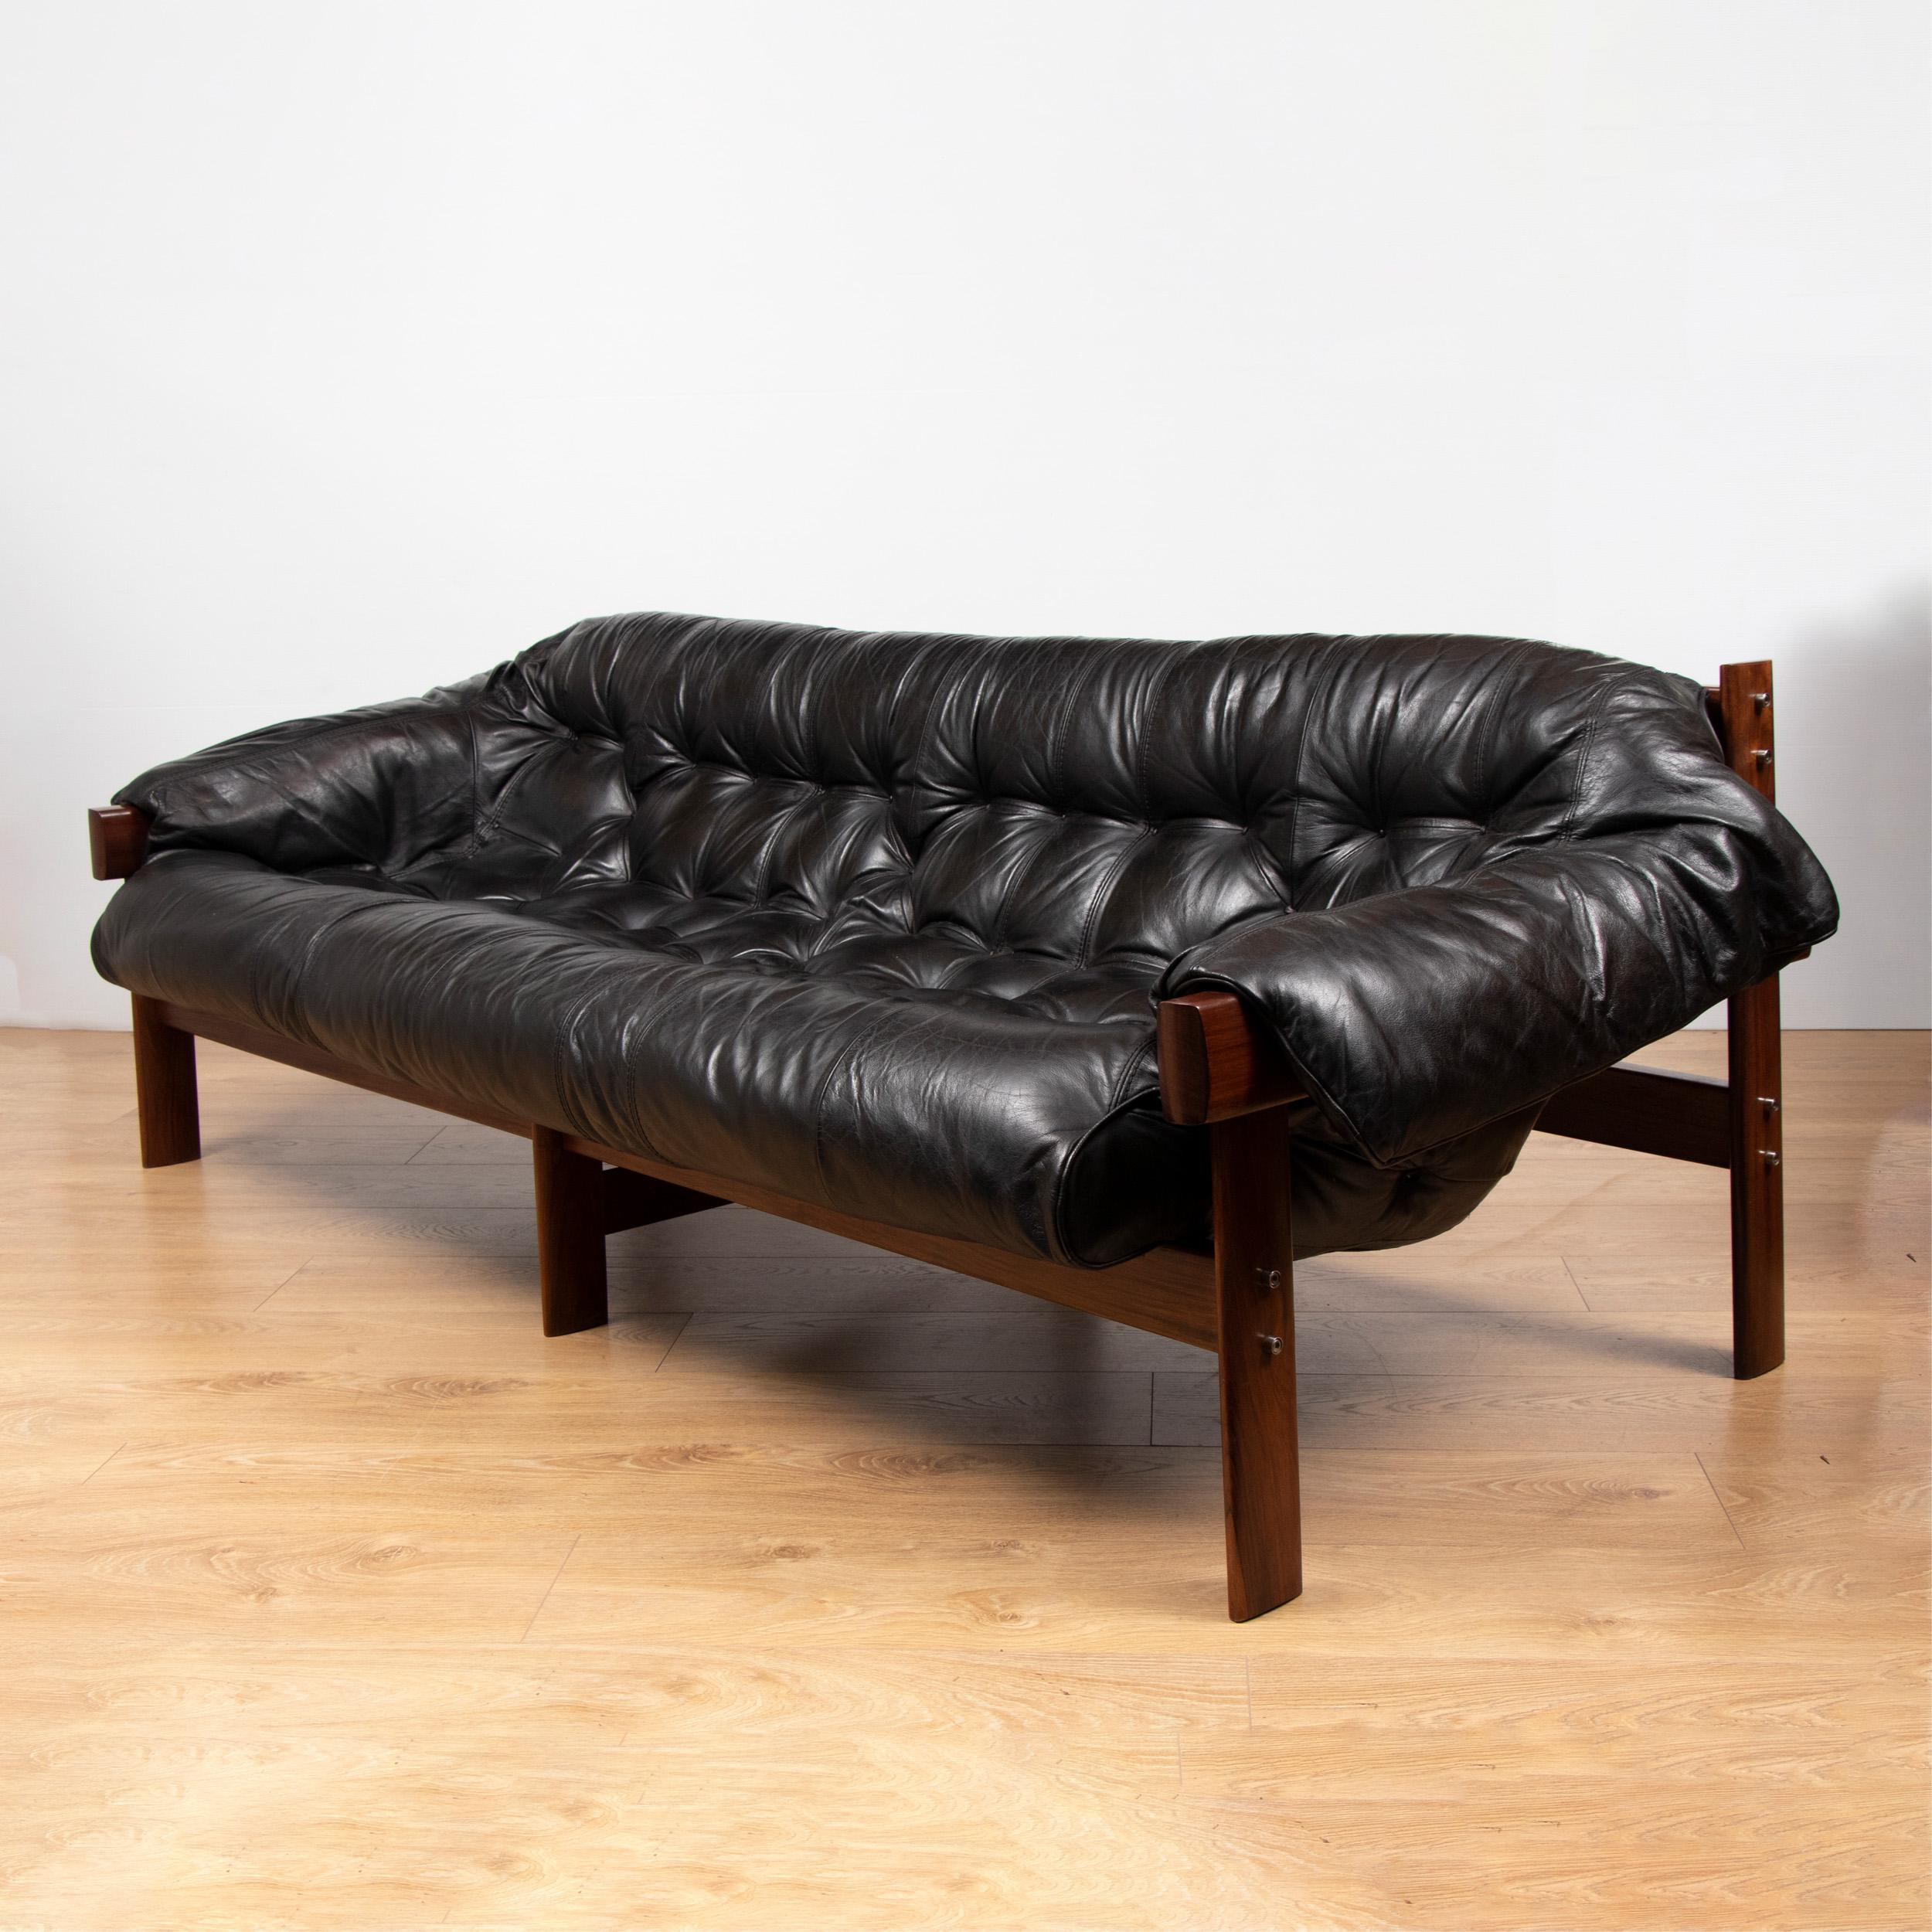 Brazilian leather tufted sofa by Percival Lafer, circa 1960.